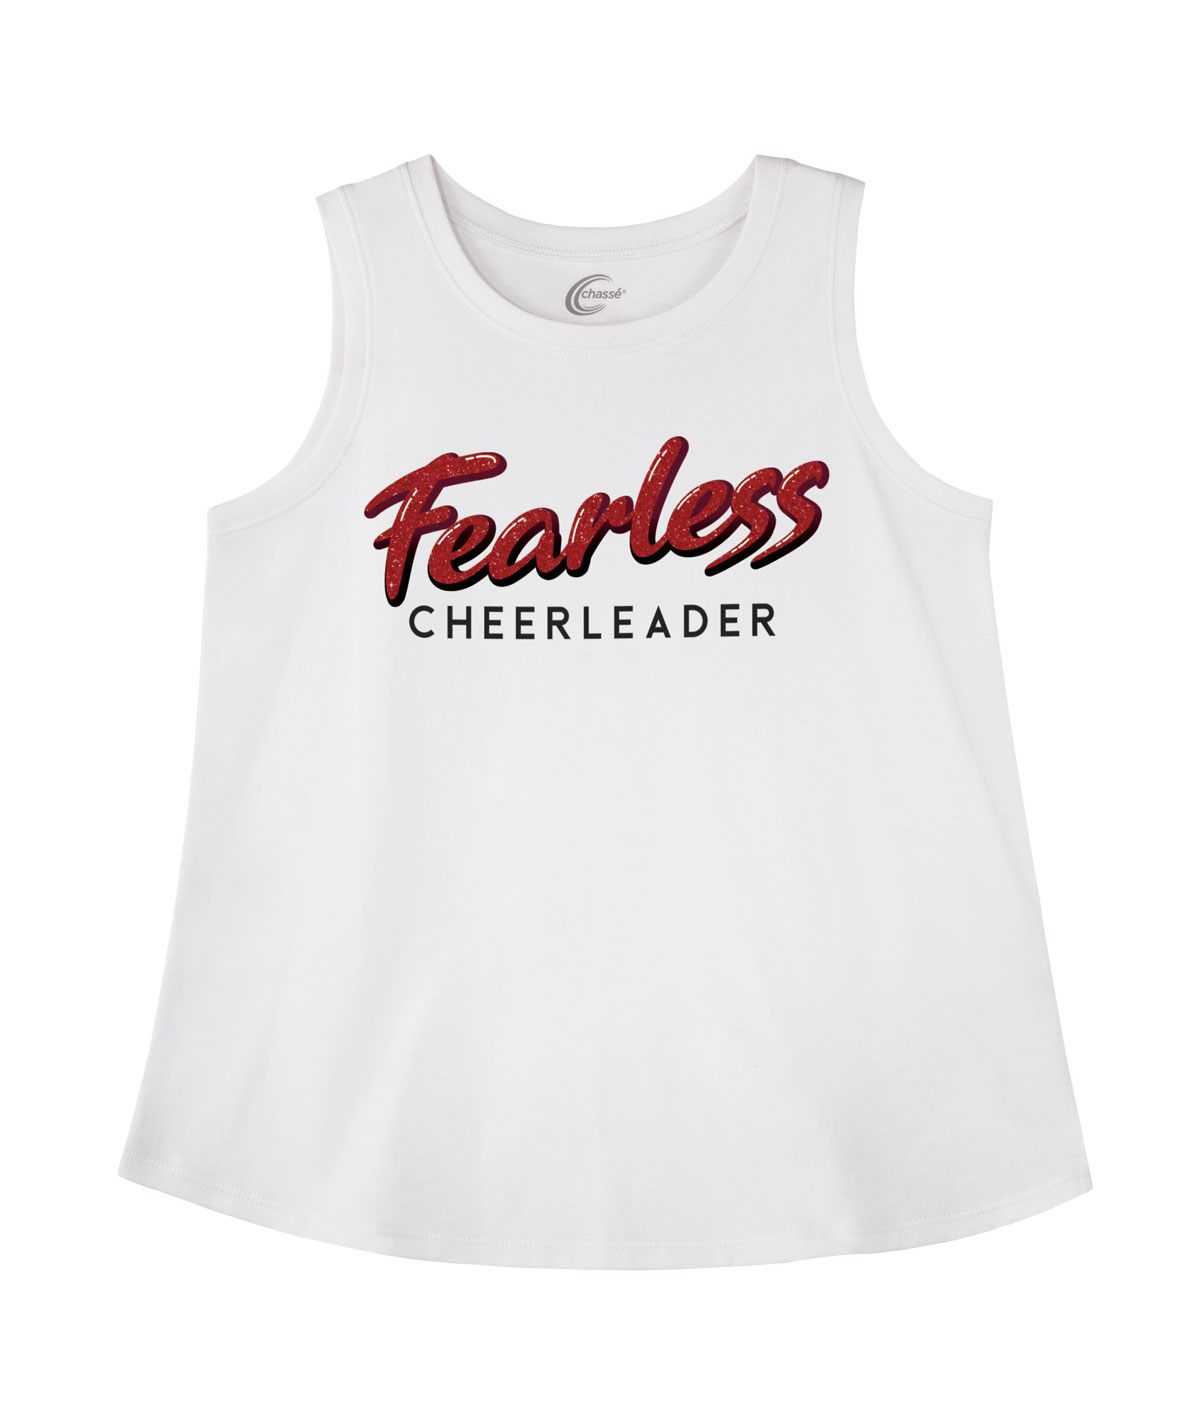 Chasse Fearless Cheerleader Tank